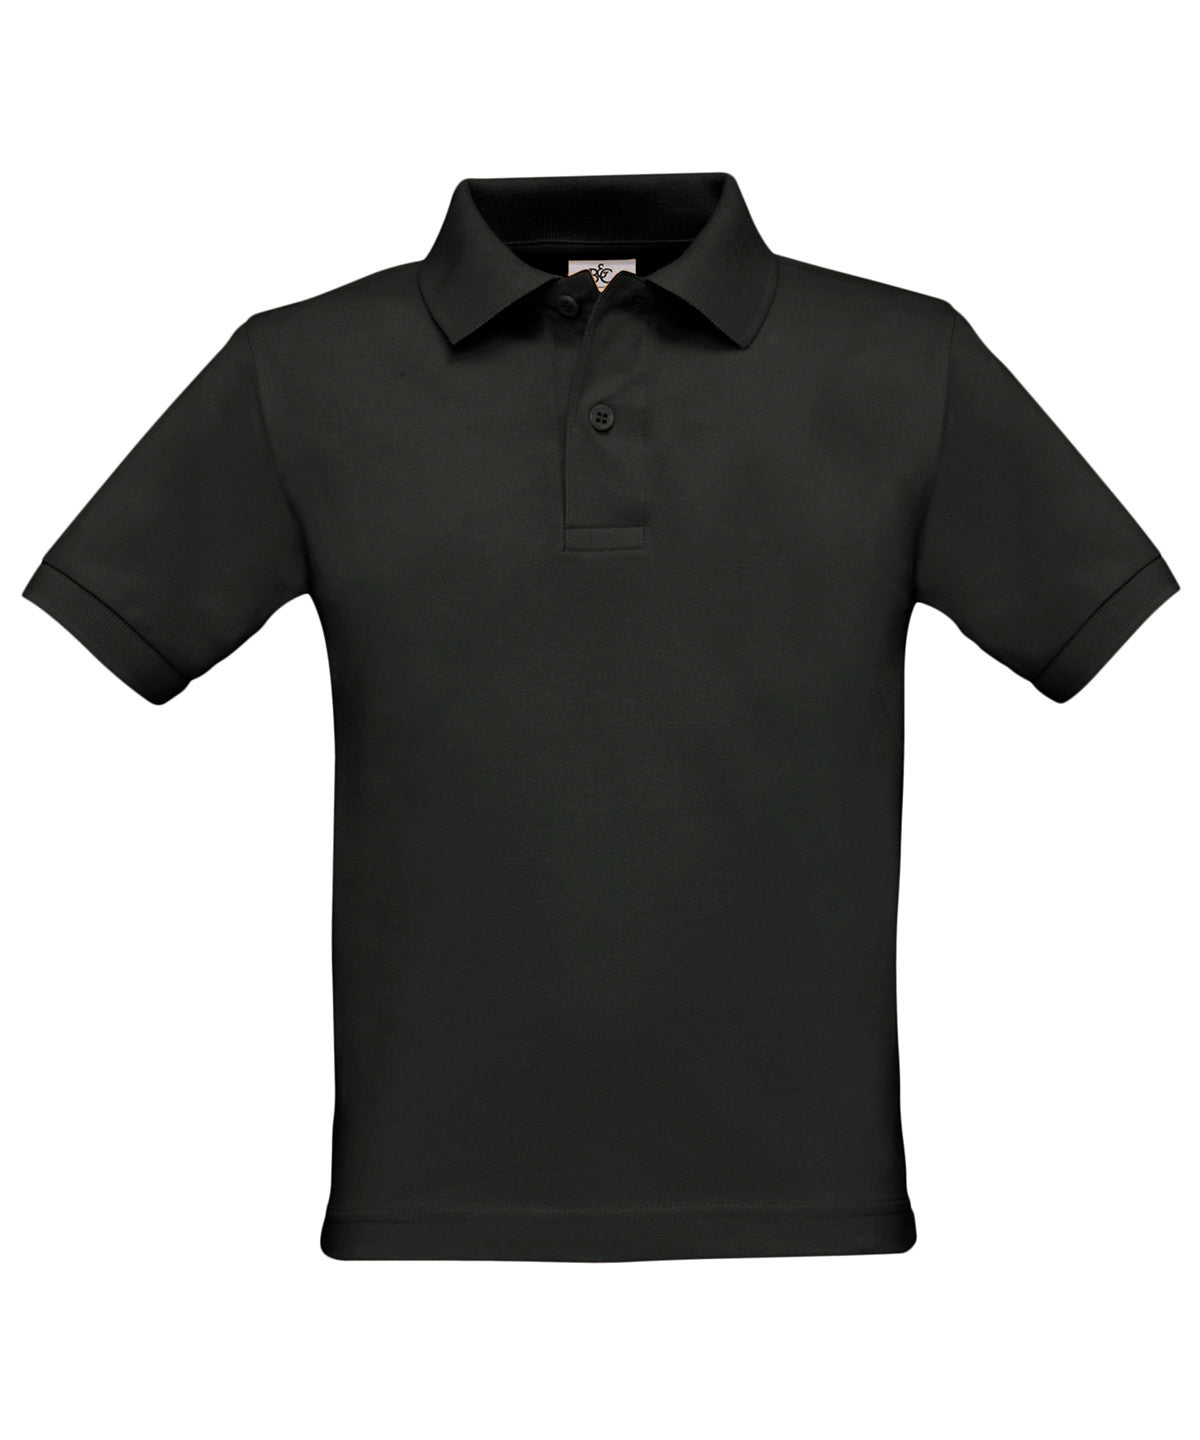 Personalised Polo Shirts - Black B&C Collection B&C Safran /kids